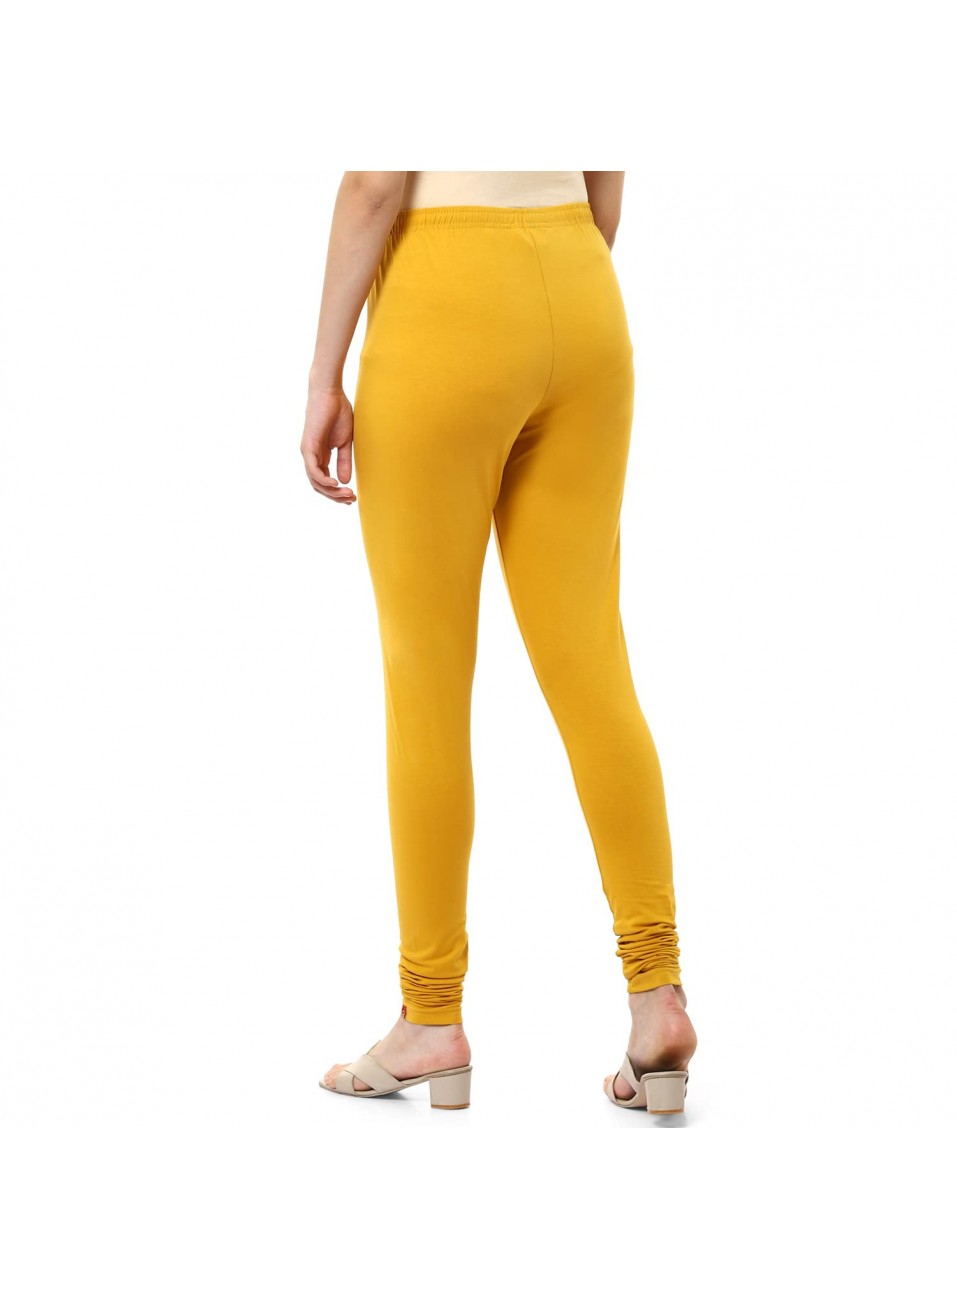 Spica Women's Yoga Legging - Mustard Color - Second Skin - (Size XS/L)